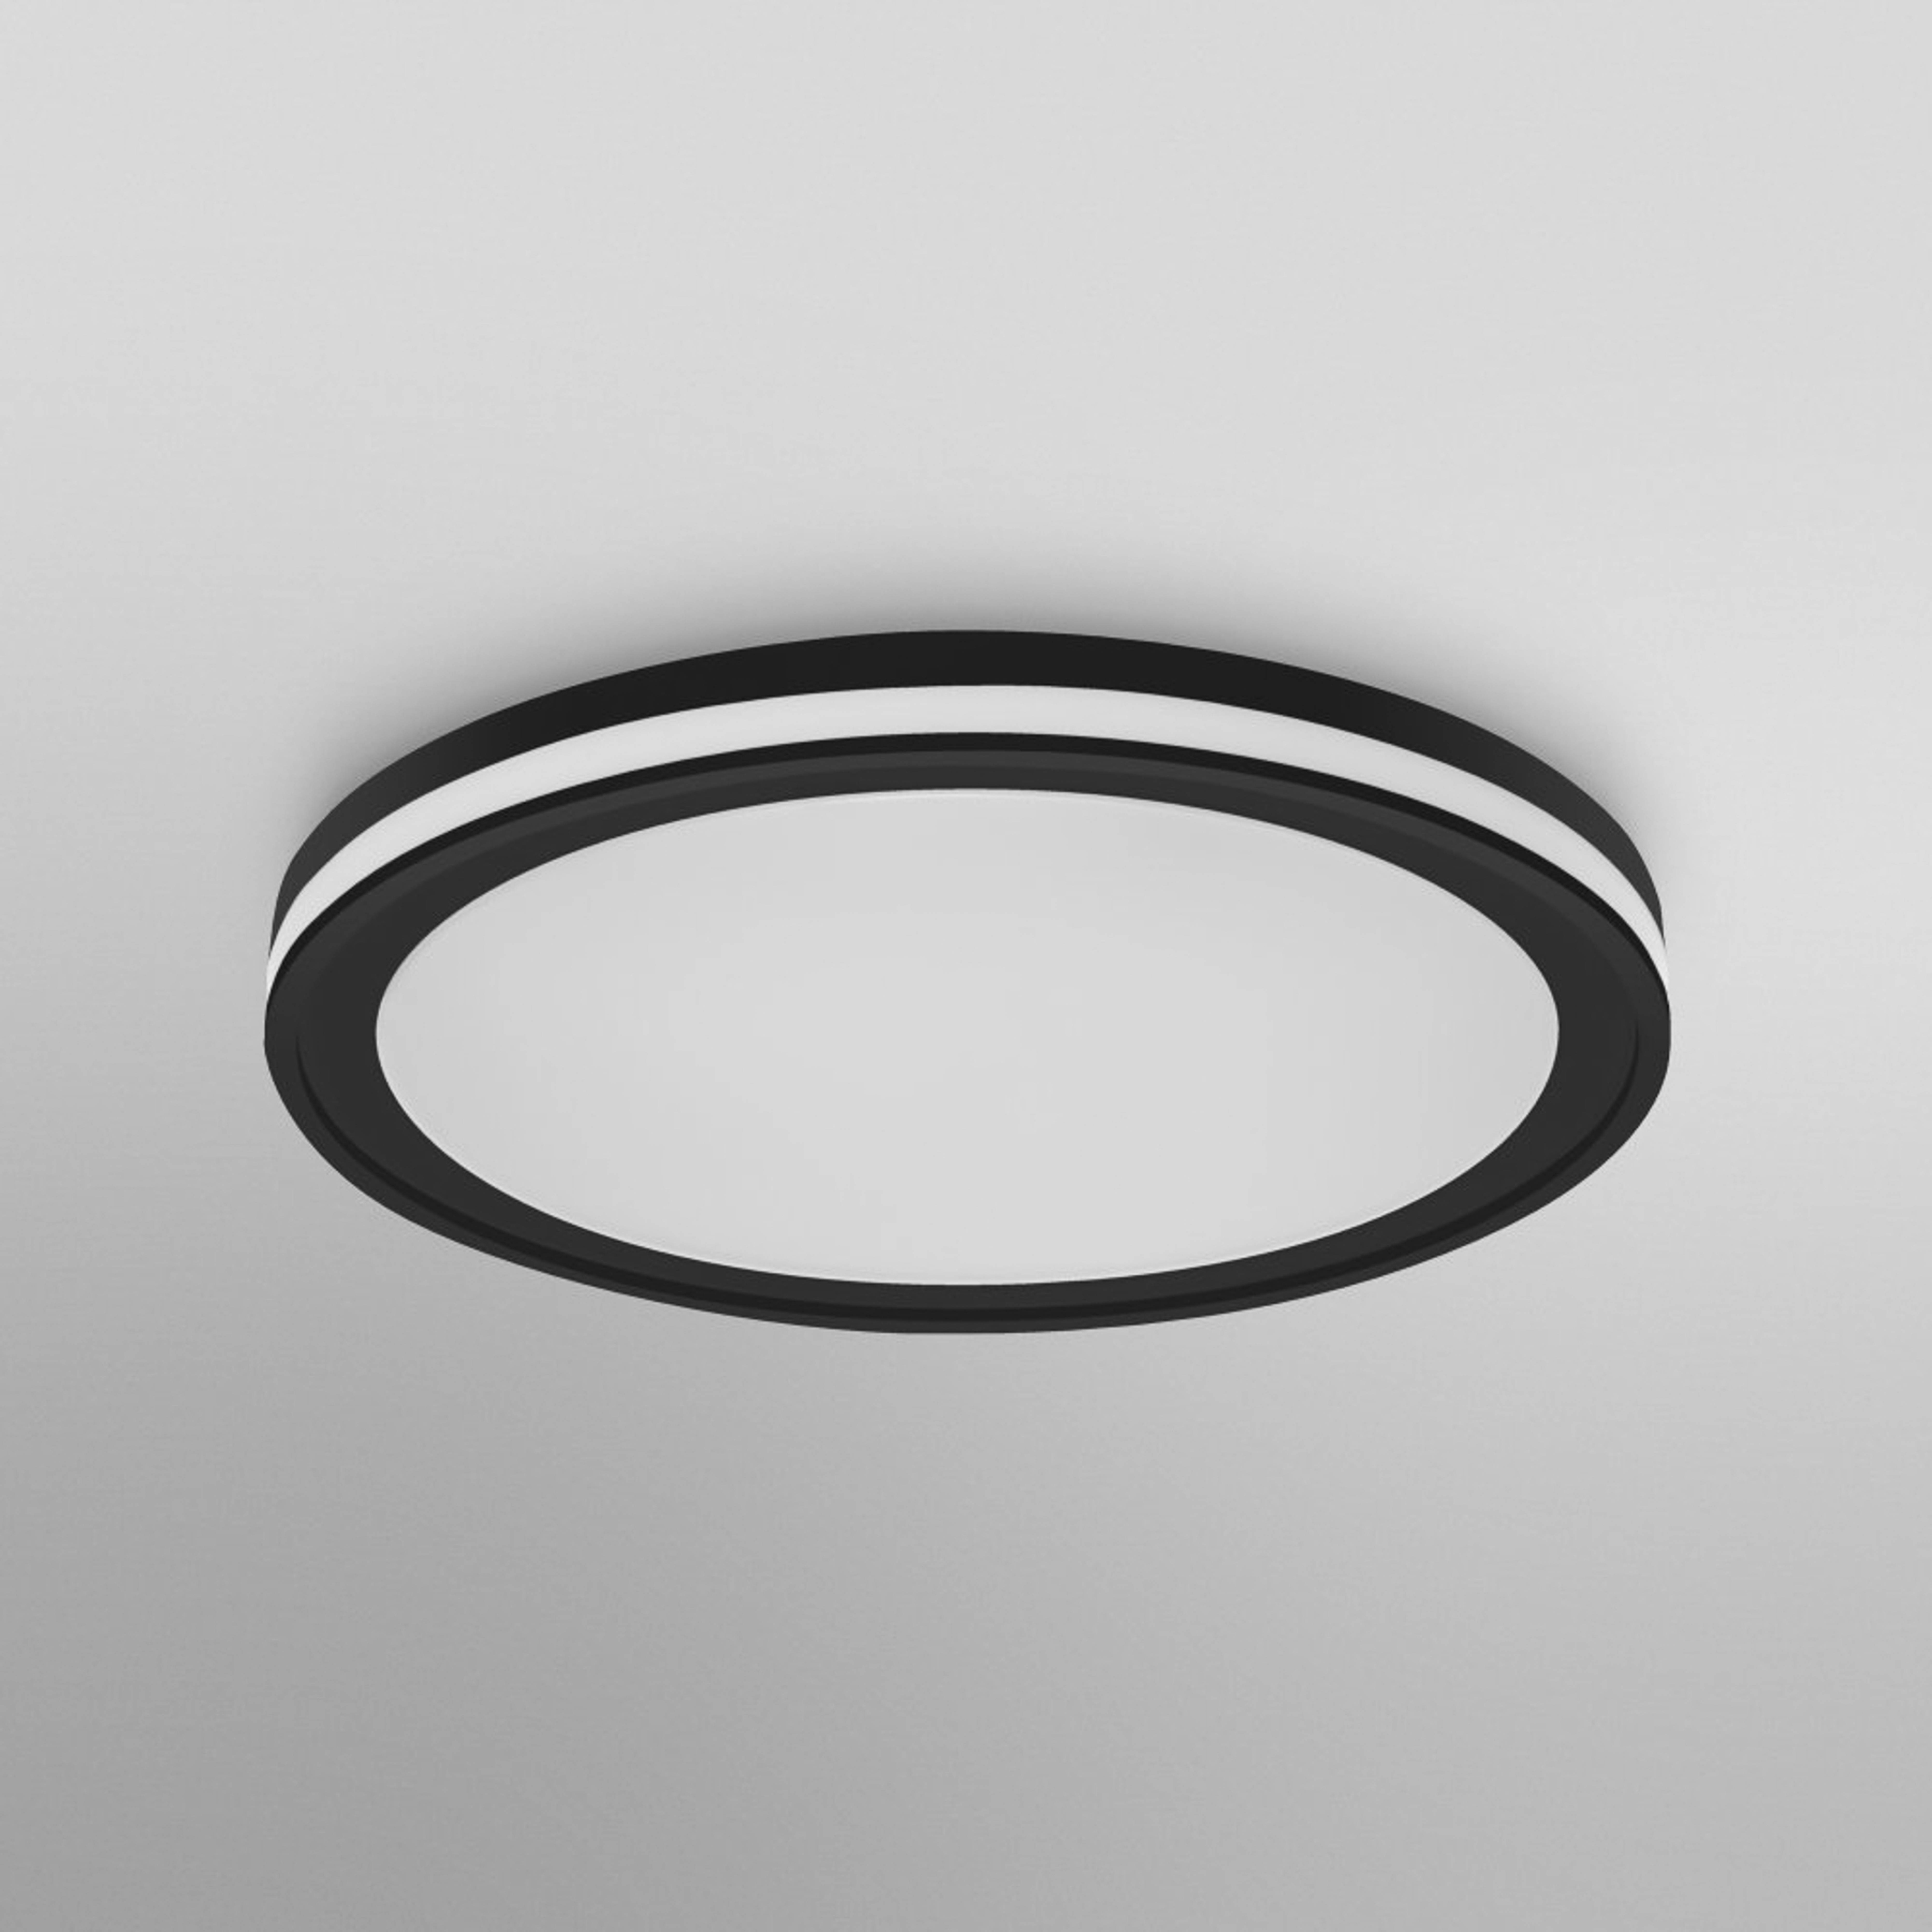 LEDVANCE SMART+ WiFi Orbis Circle CCT RGB schwarz